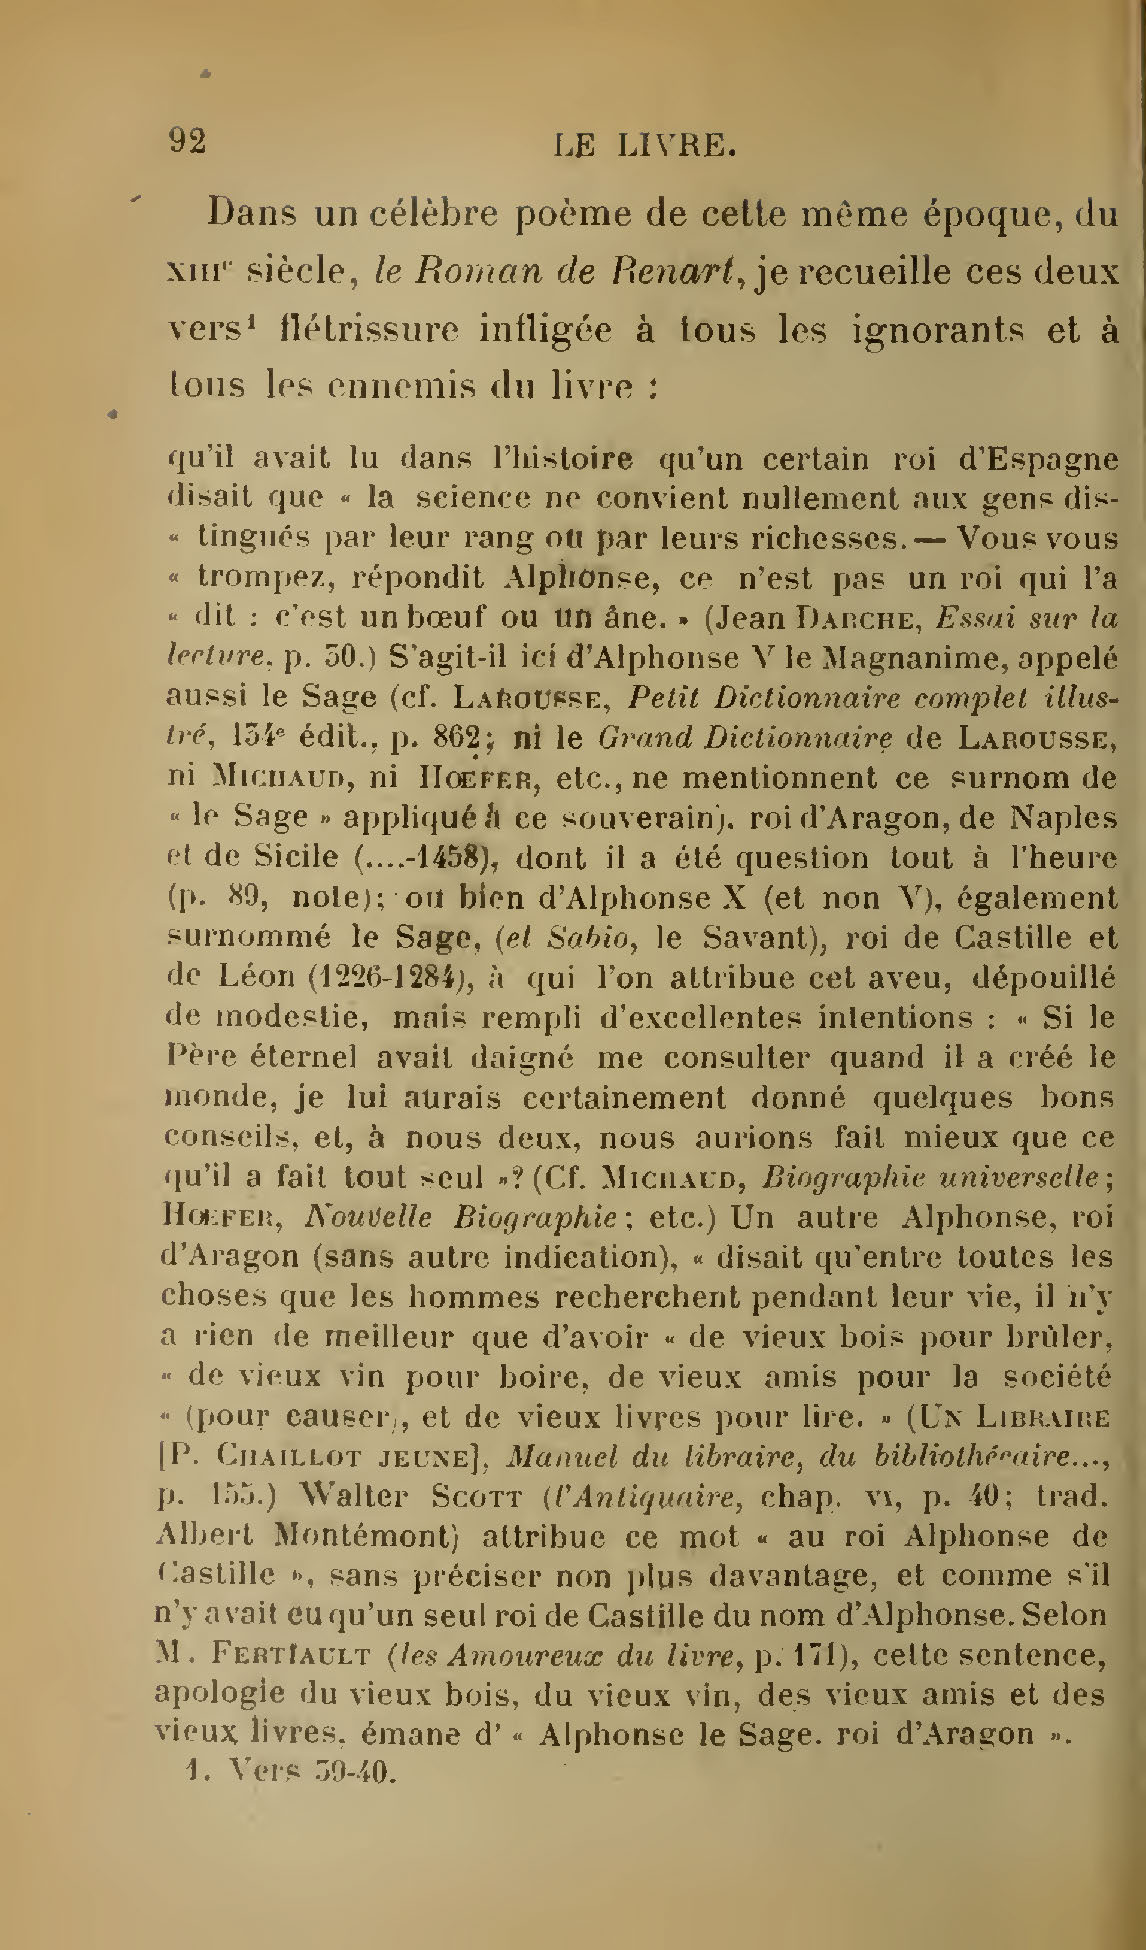 Albert Cim, Le Livre, t. I, p. 92.